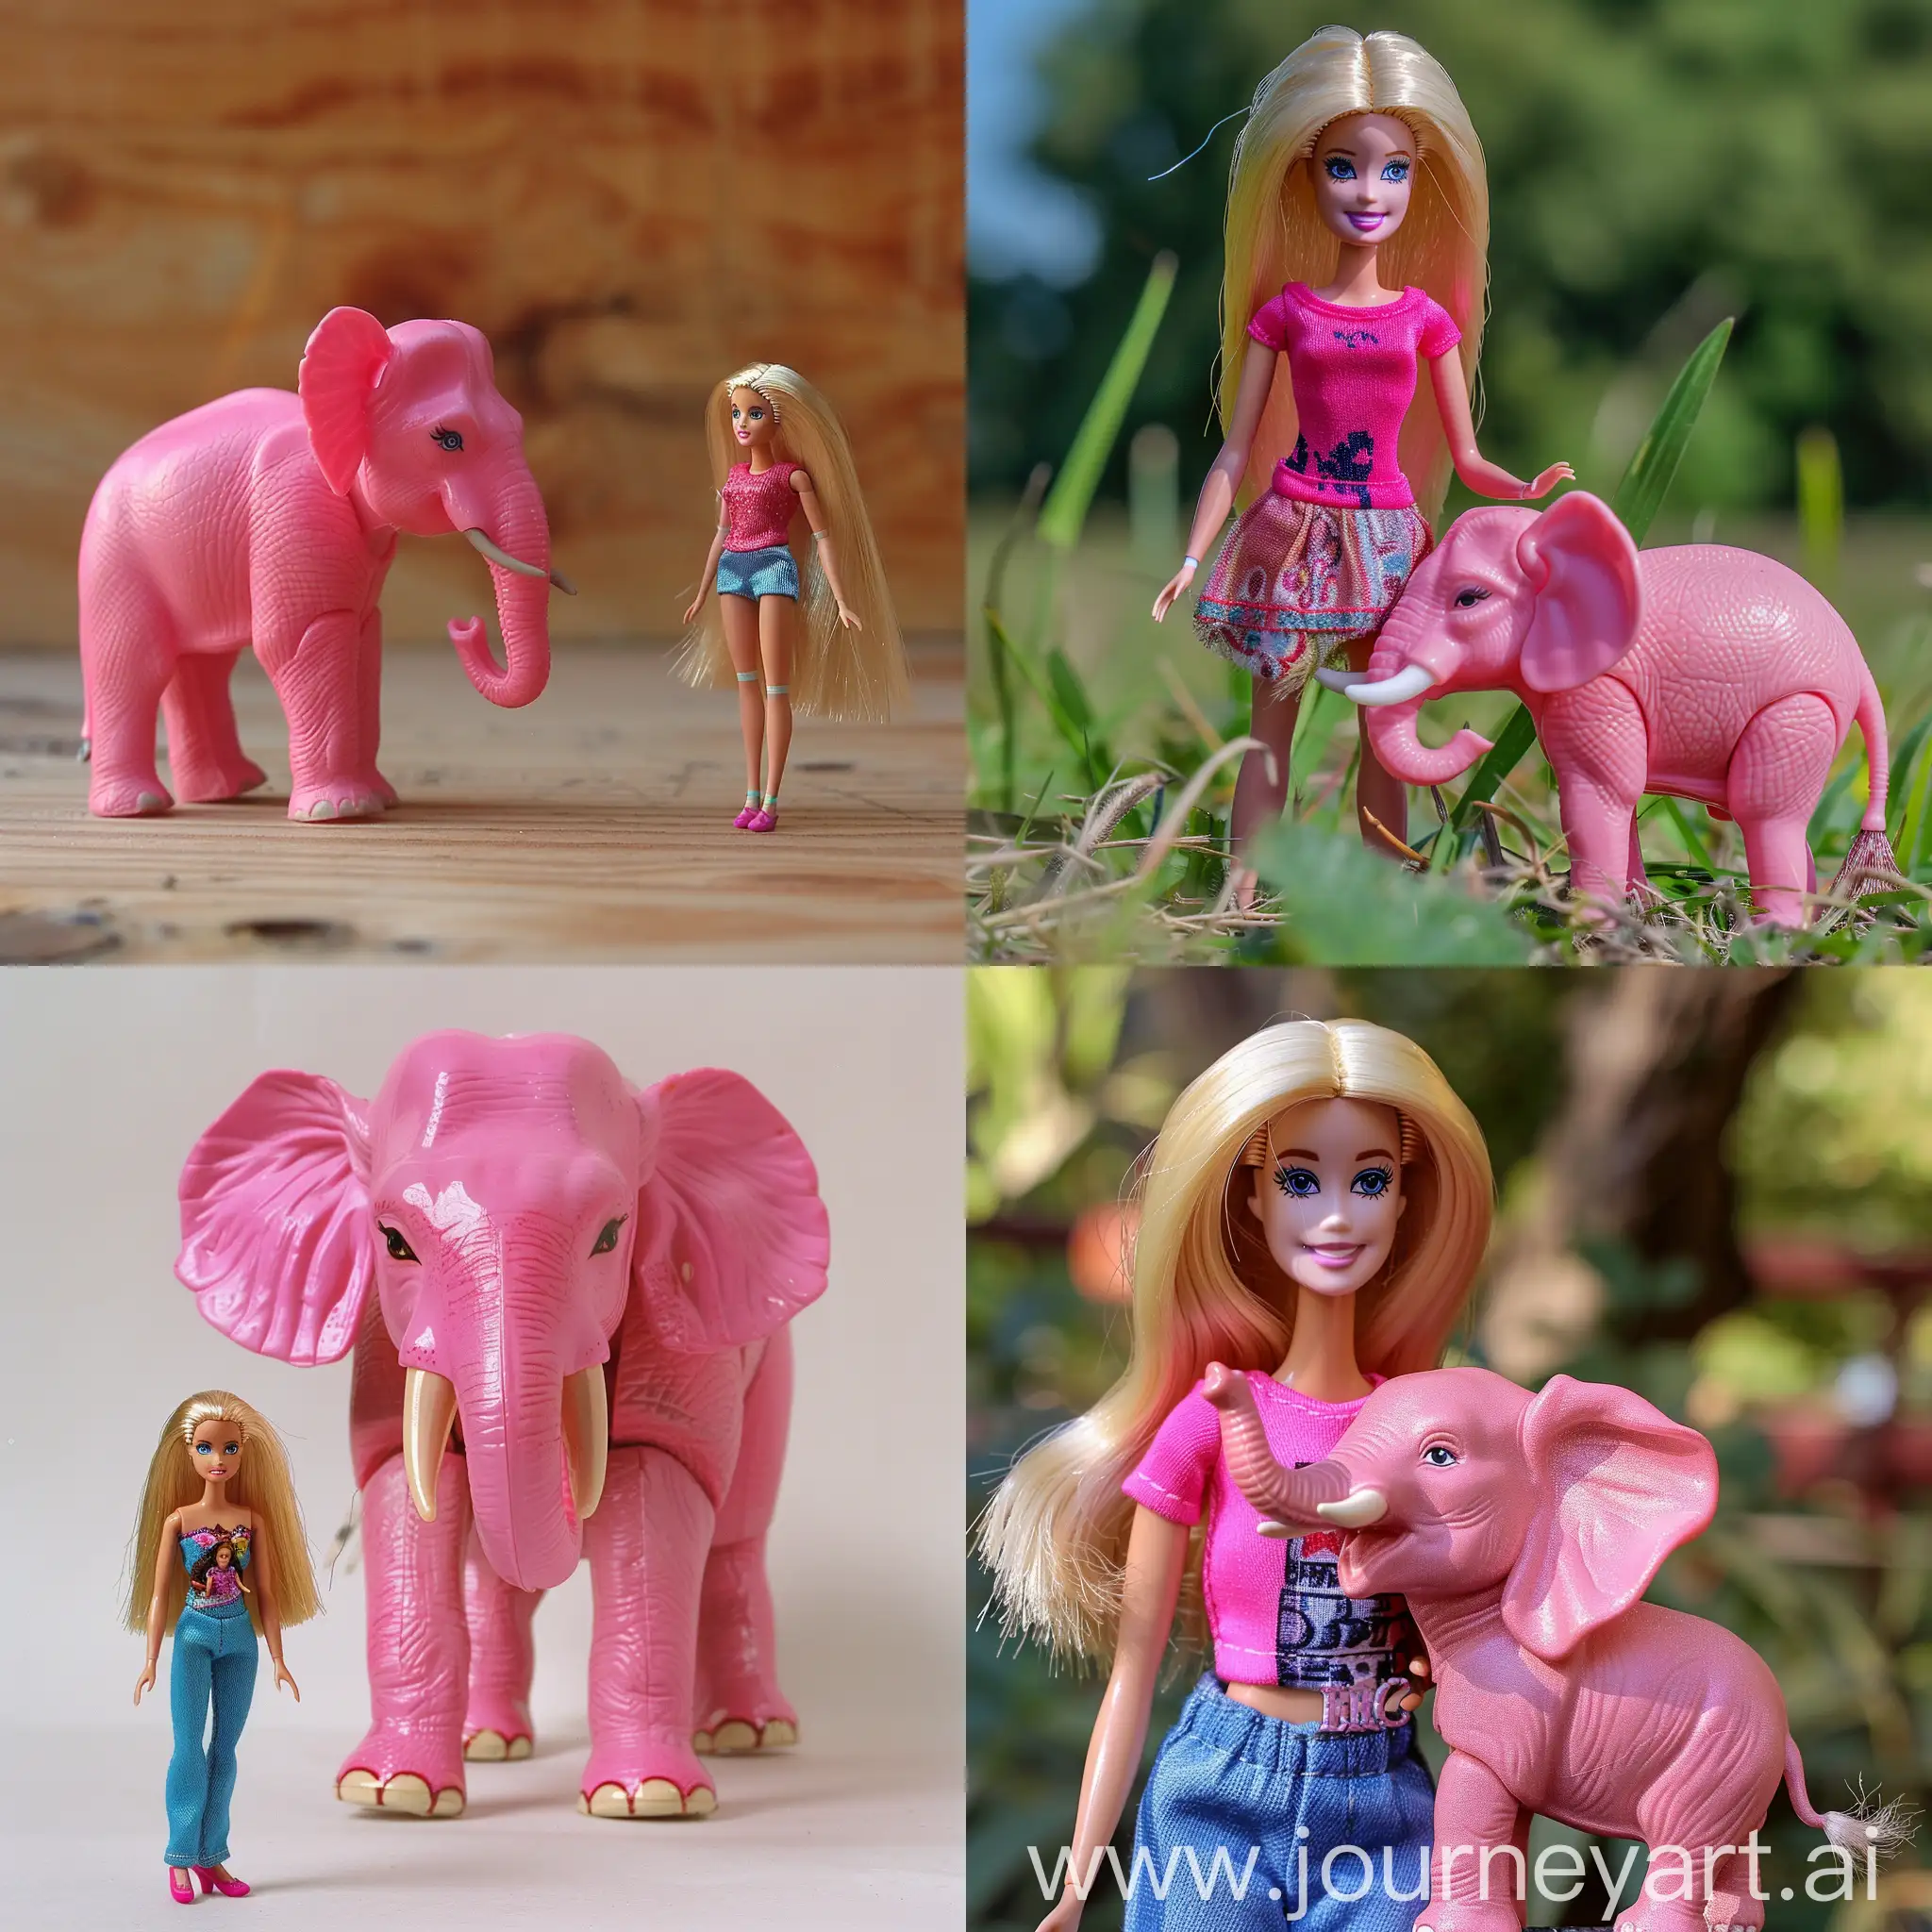 Pink elephant with barbie
